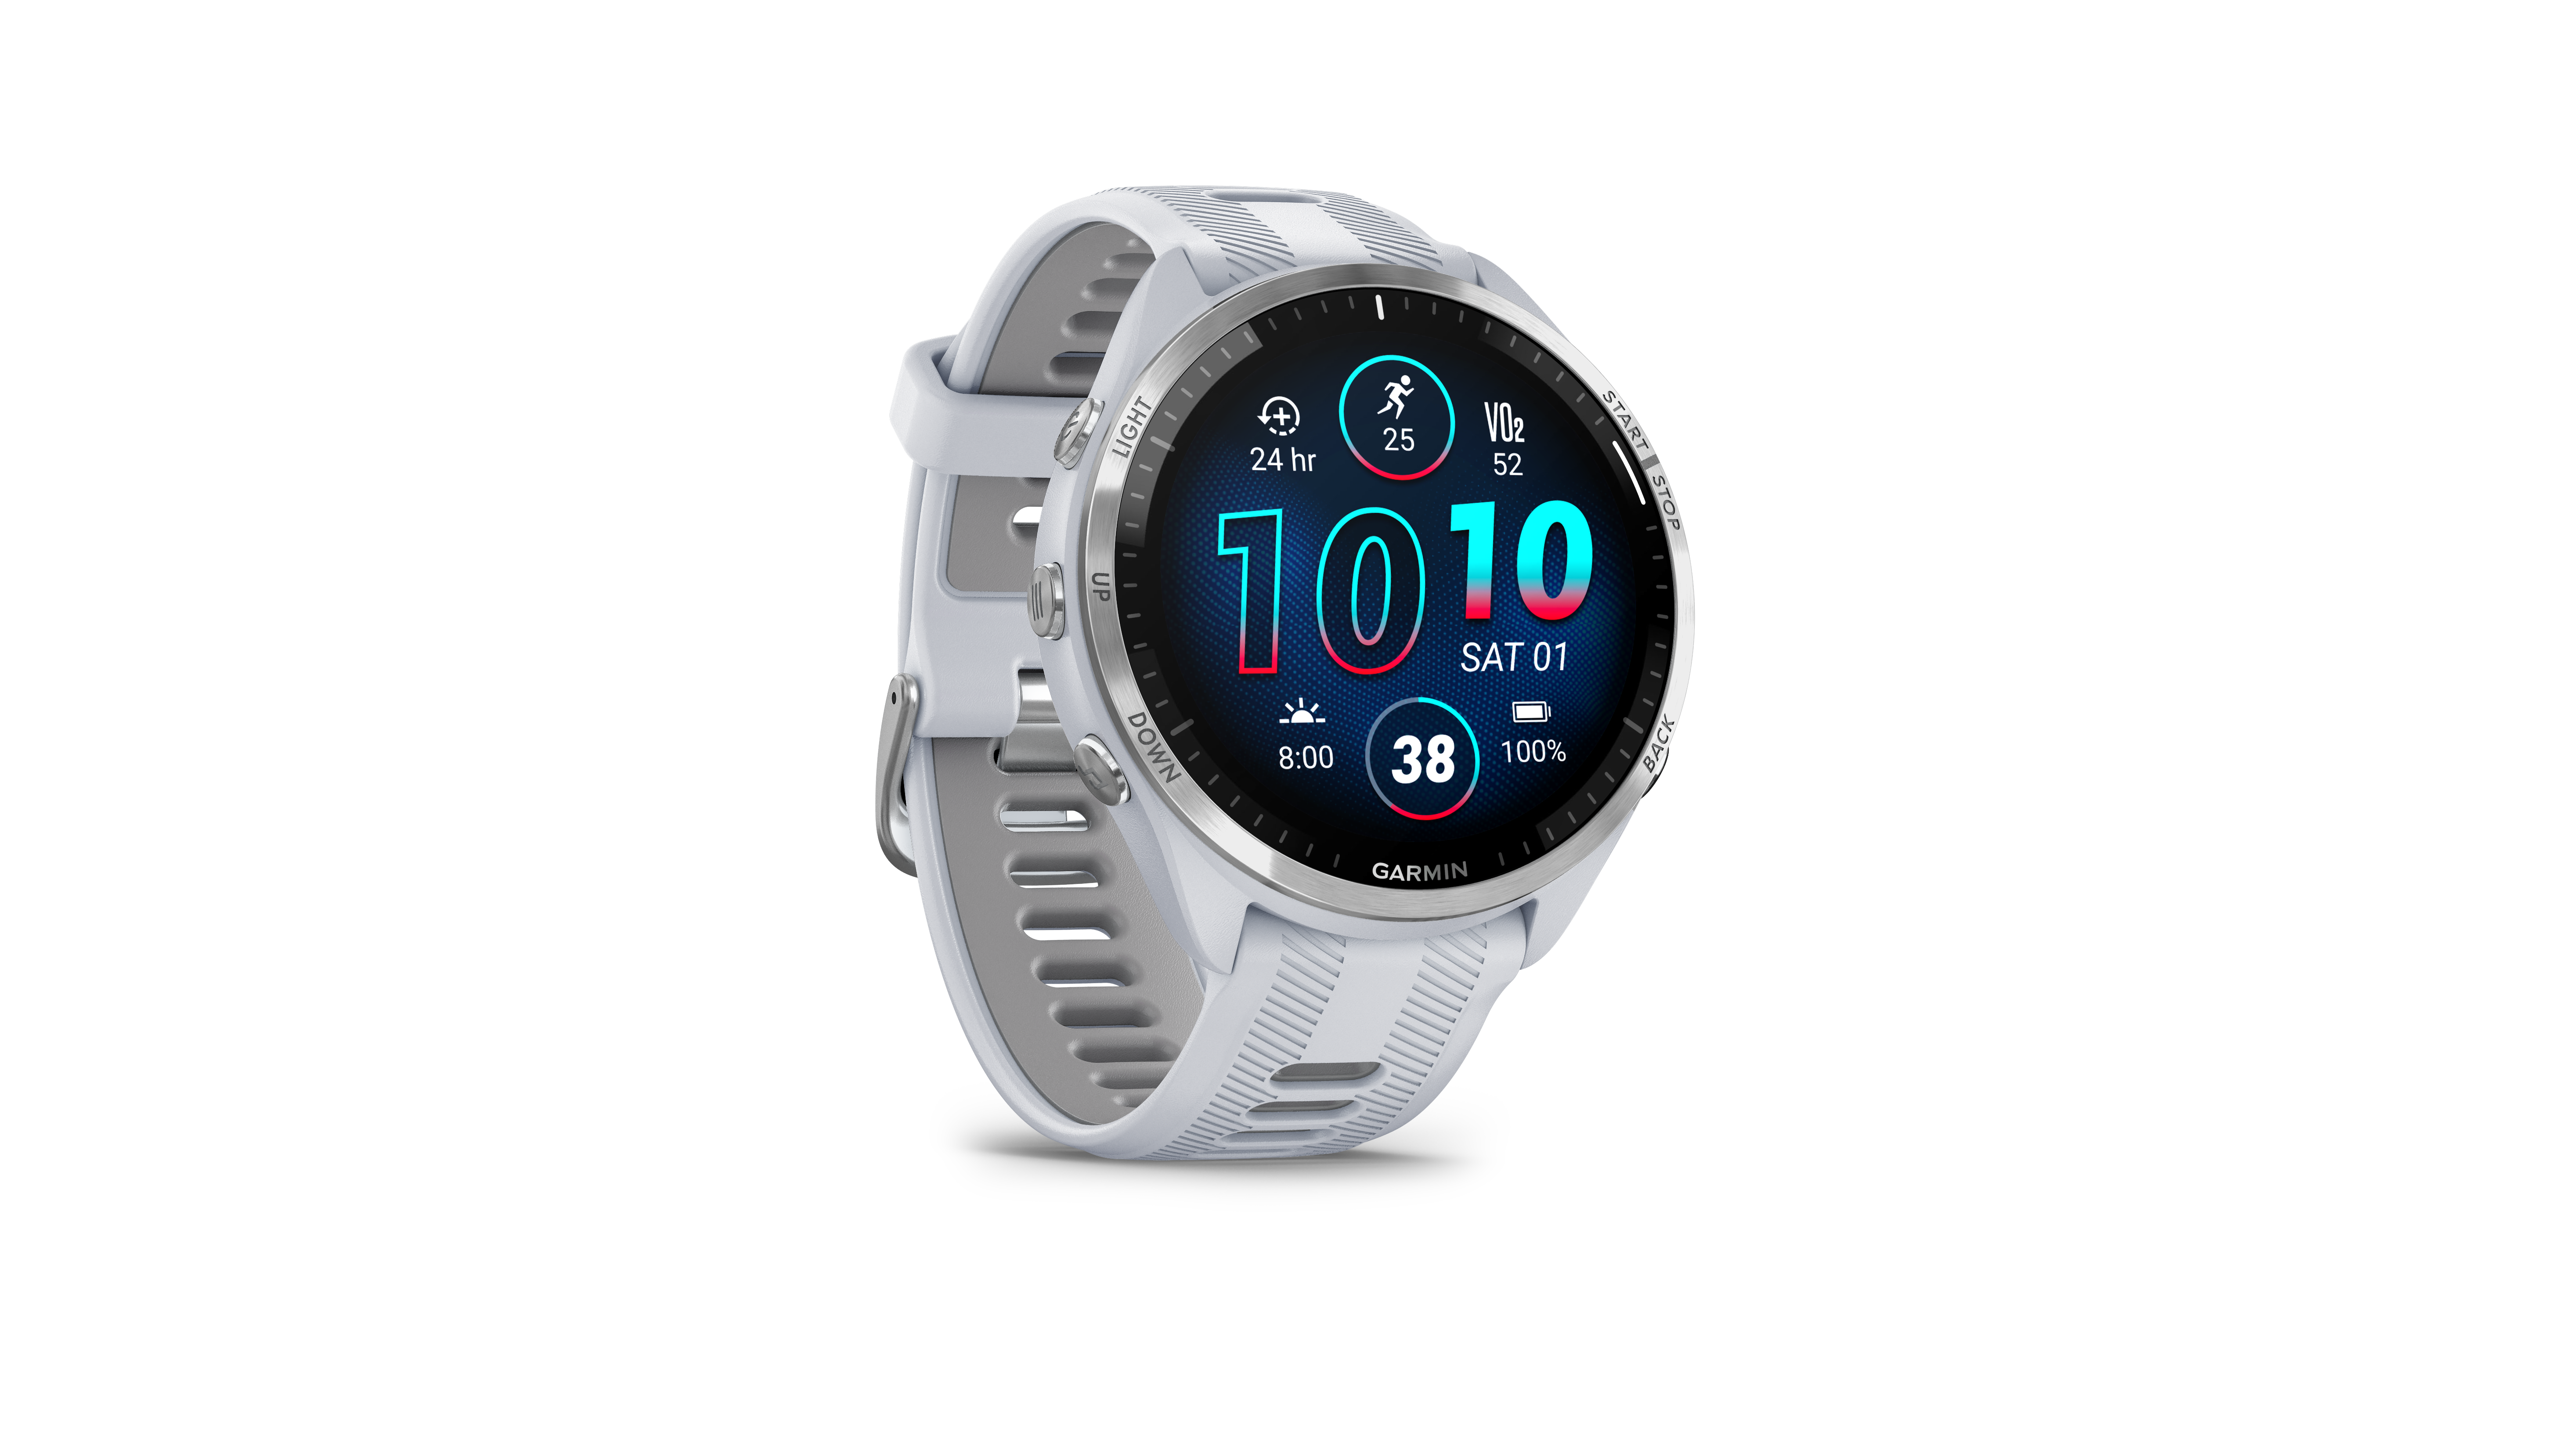 These new Garmin Forerunner smartwatches look fantastic